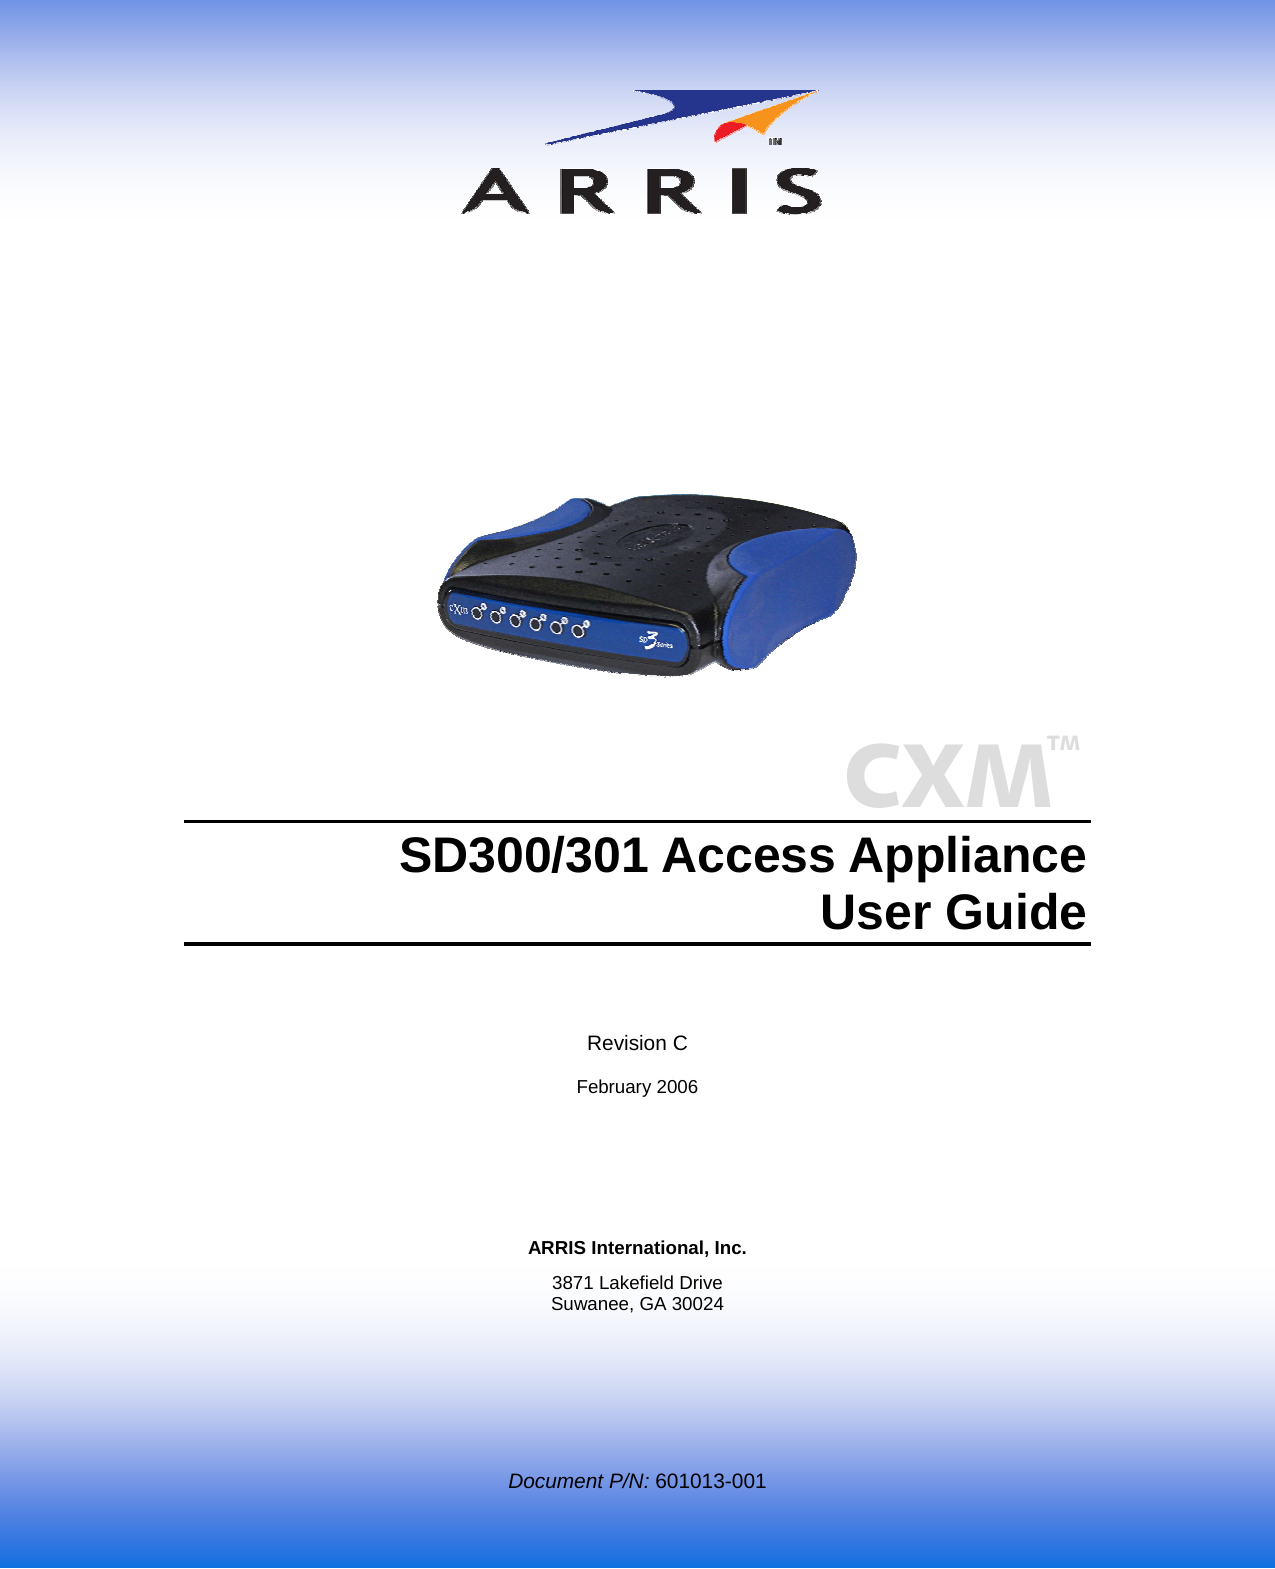   Document P/N: 601013-001 CXM TM                  SD300/301 Access Appliance User Guide  Revision C  February 2006      ARRIS International, Inc. 3871 Lakefield Drive Suwanee, GA 30024 